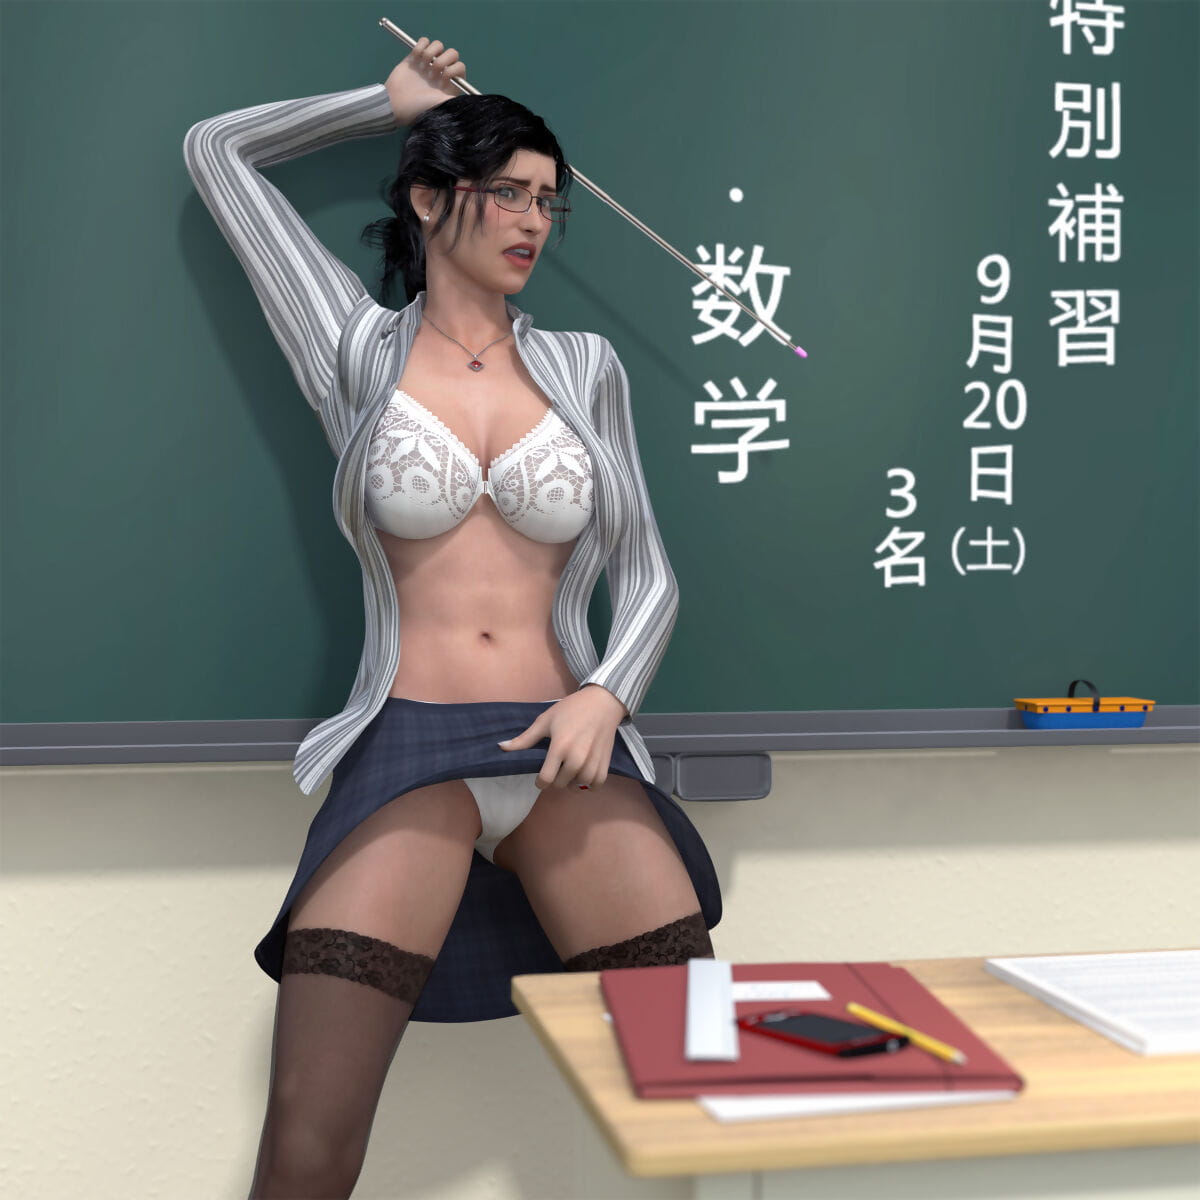 Minoru Hiromi Female Feacher 1 - 9-20 3D speechless